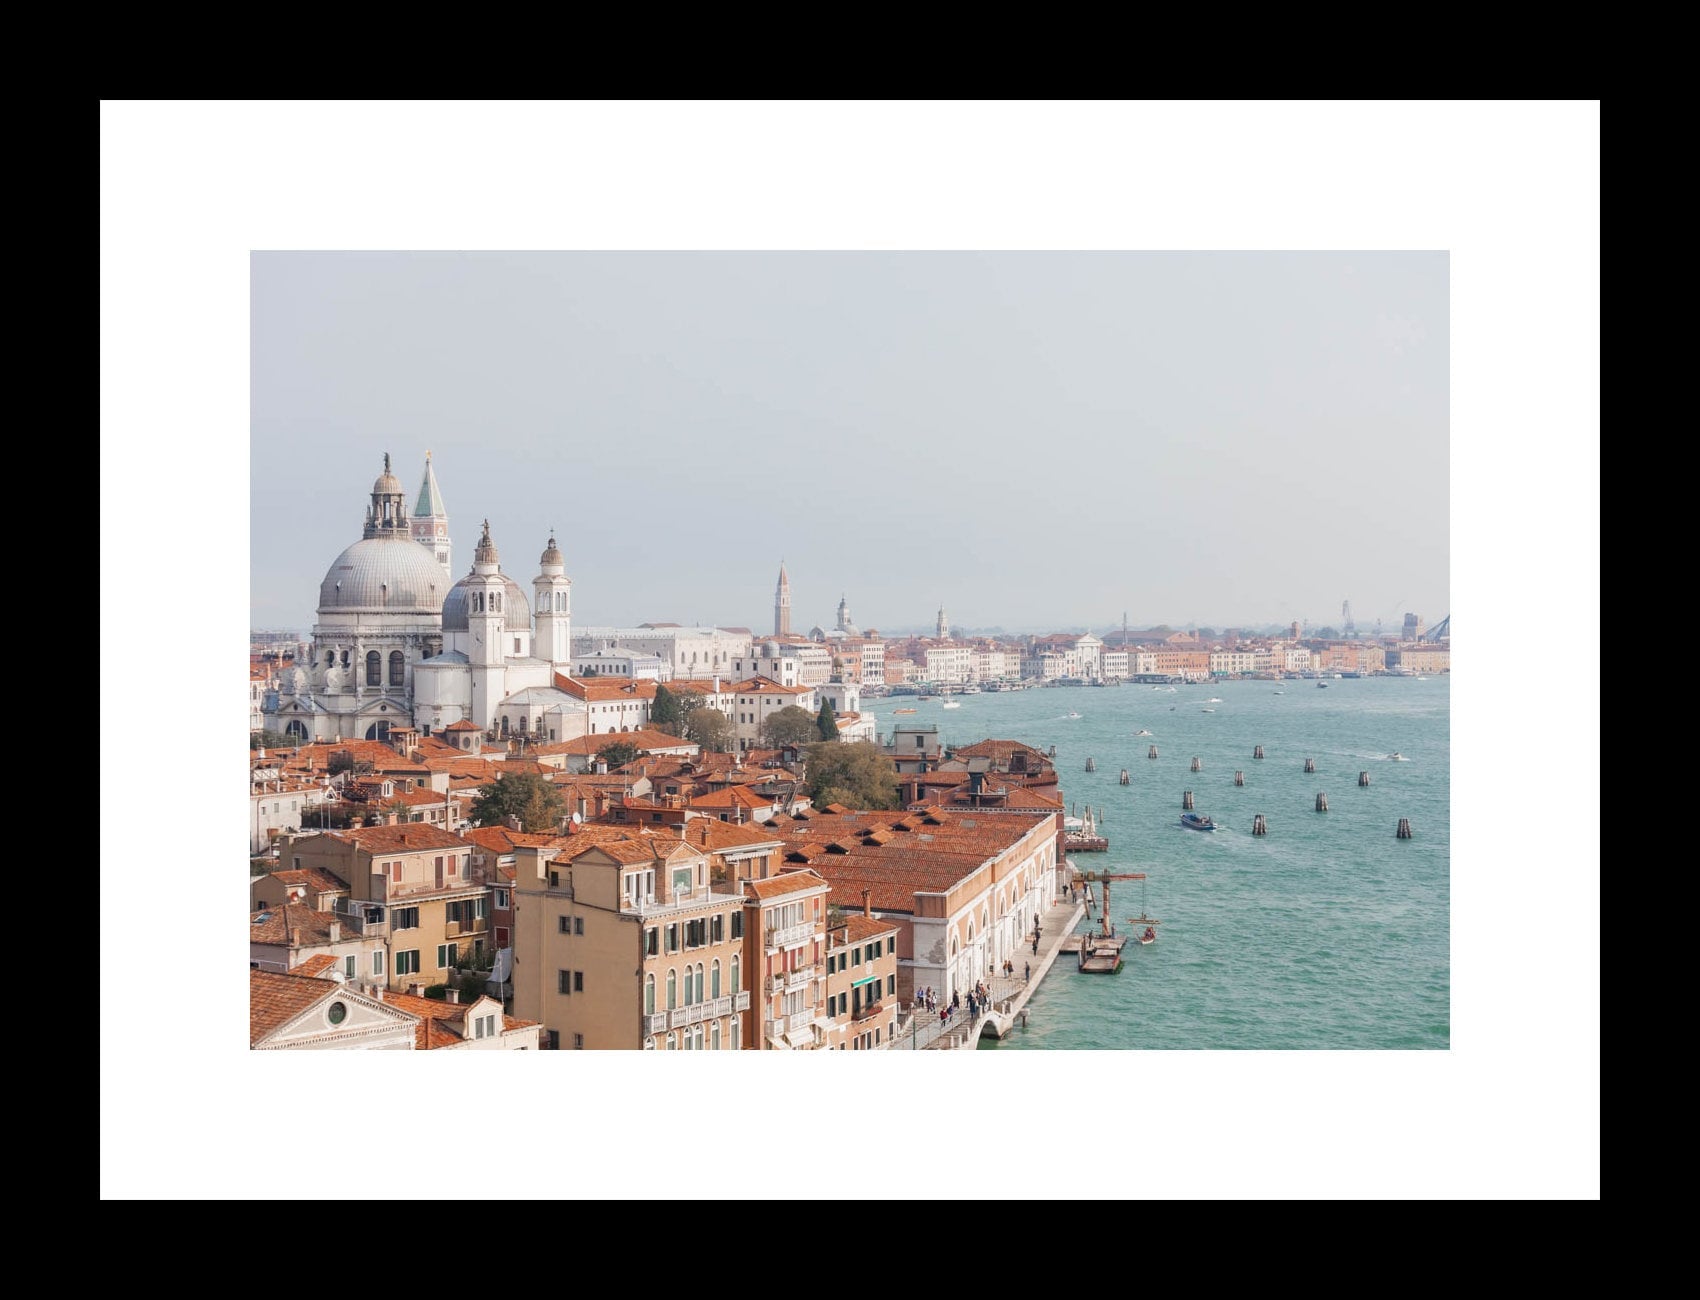 Venice Italy Landscape Photography Print, Grand Canal View, Large Living Room Wall Art, Travel Souvenir, City of Venezia - eireanneilis